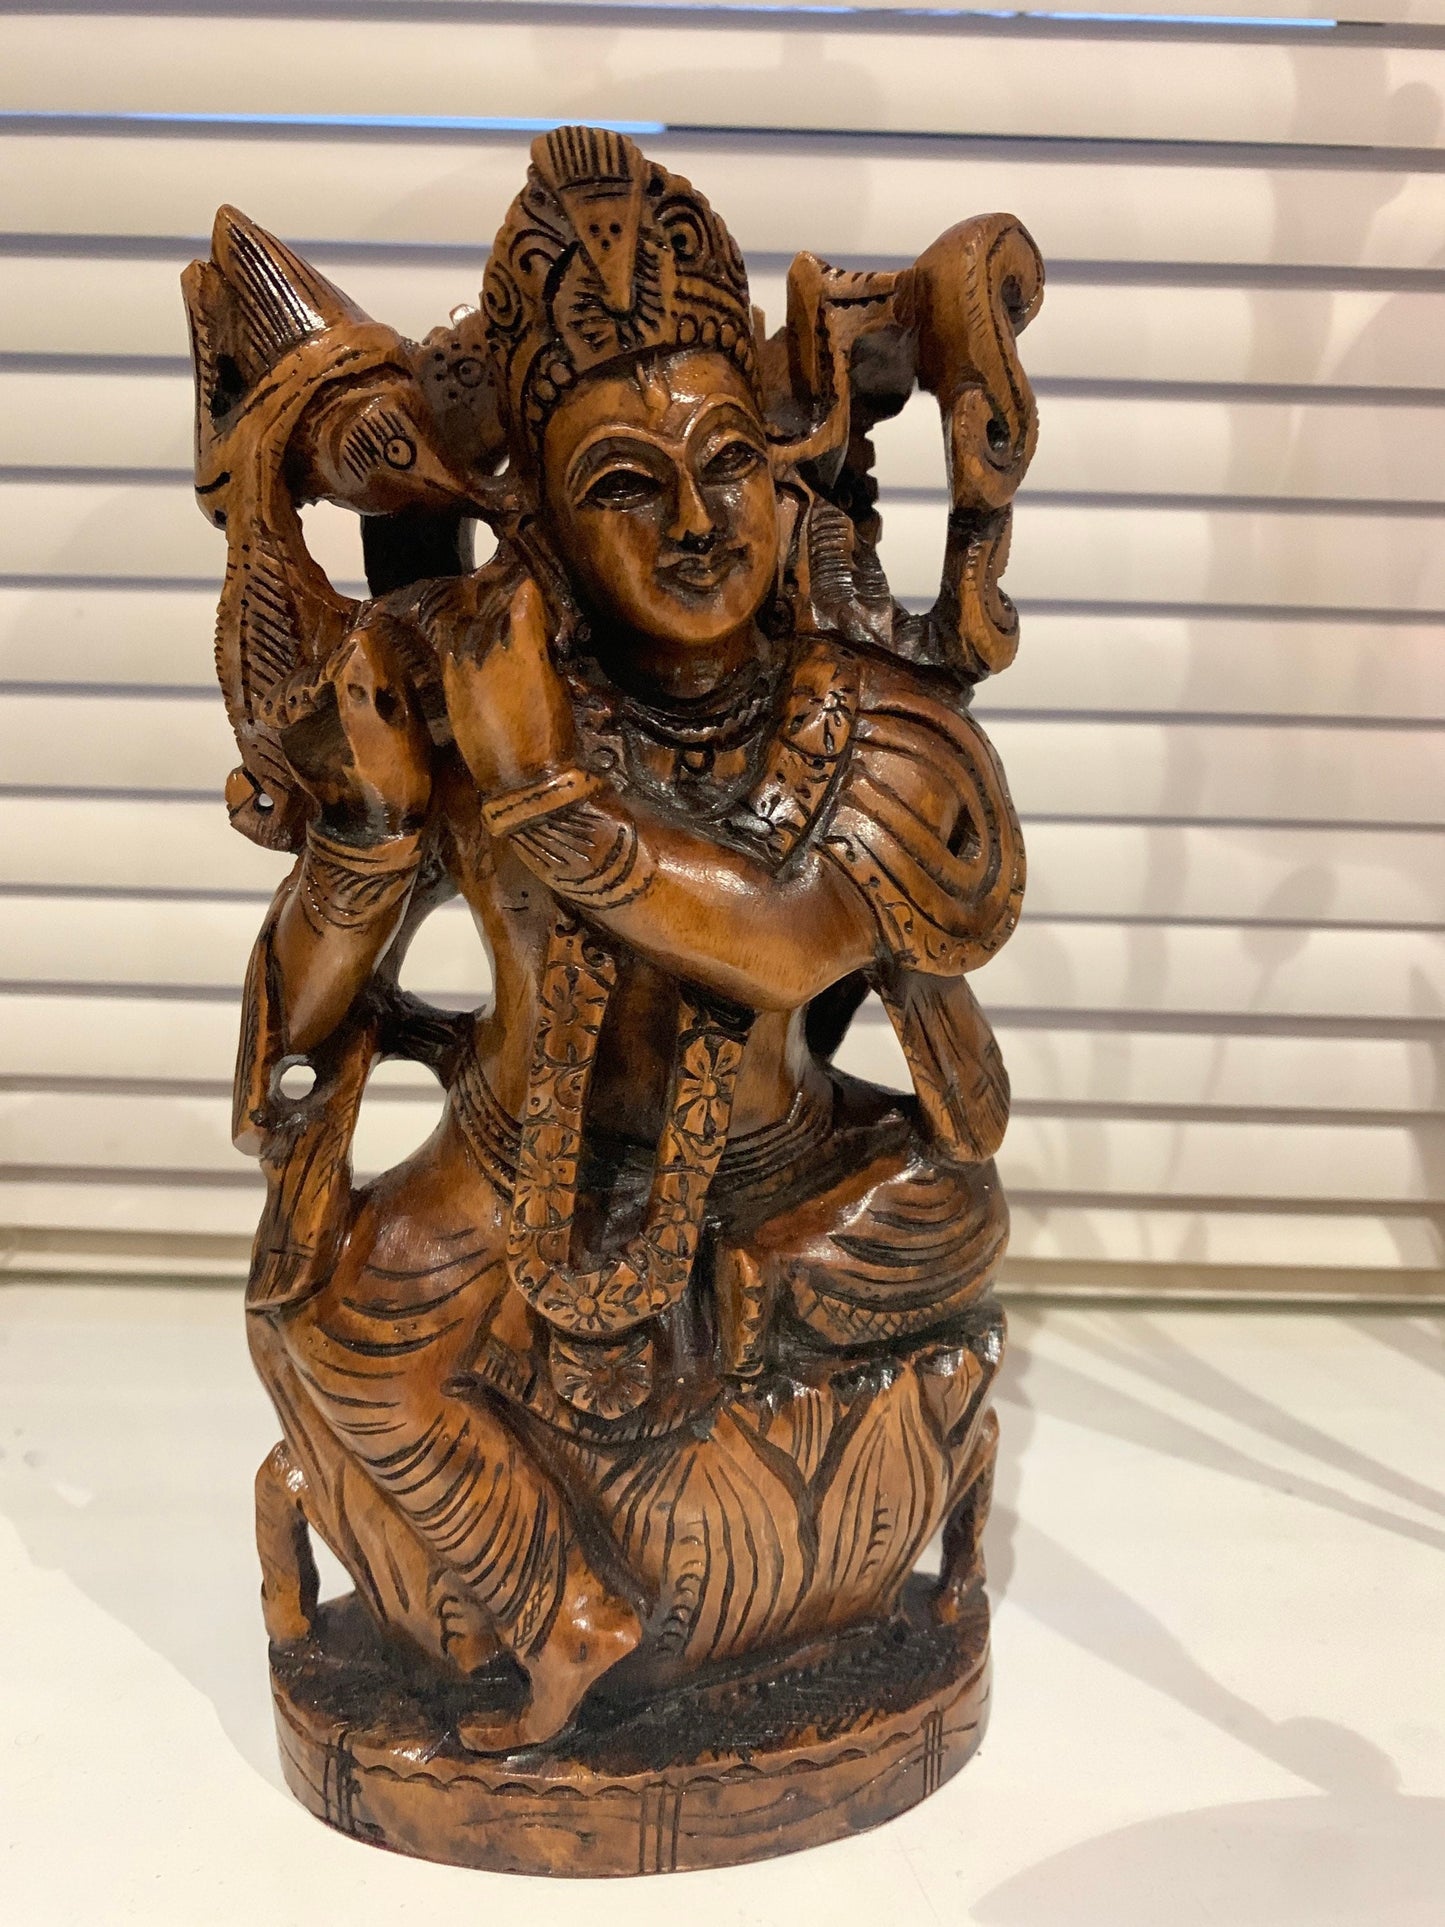 Lord Krishna Statue 8" wood decor statue, Hindu deity god, meditation yoga gift home decor, Hand Carved krishna figurine sculpture, KRISHNA